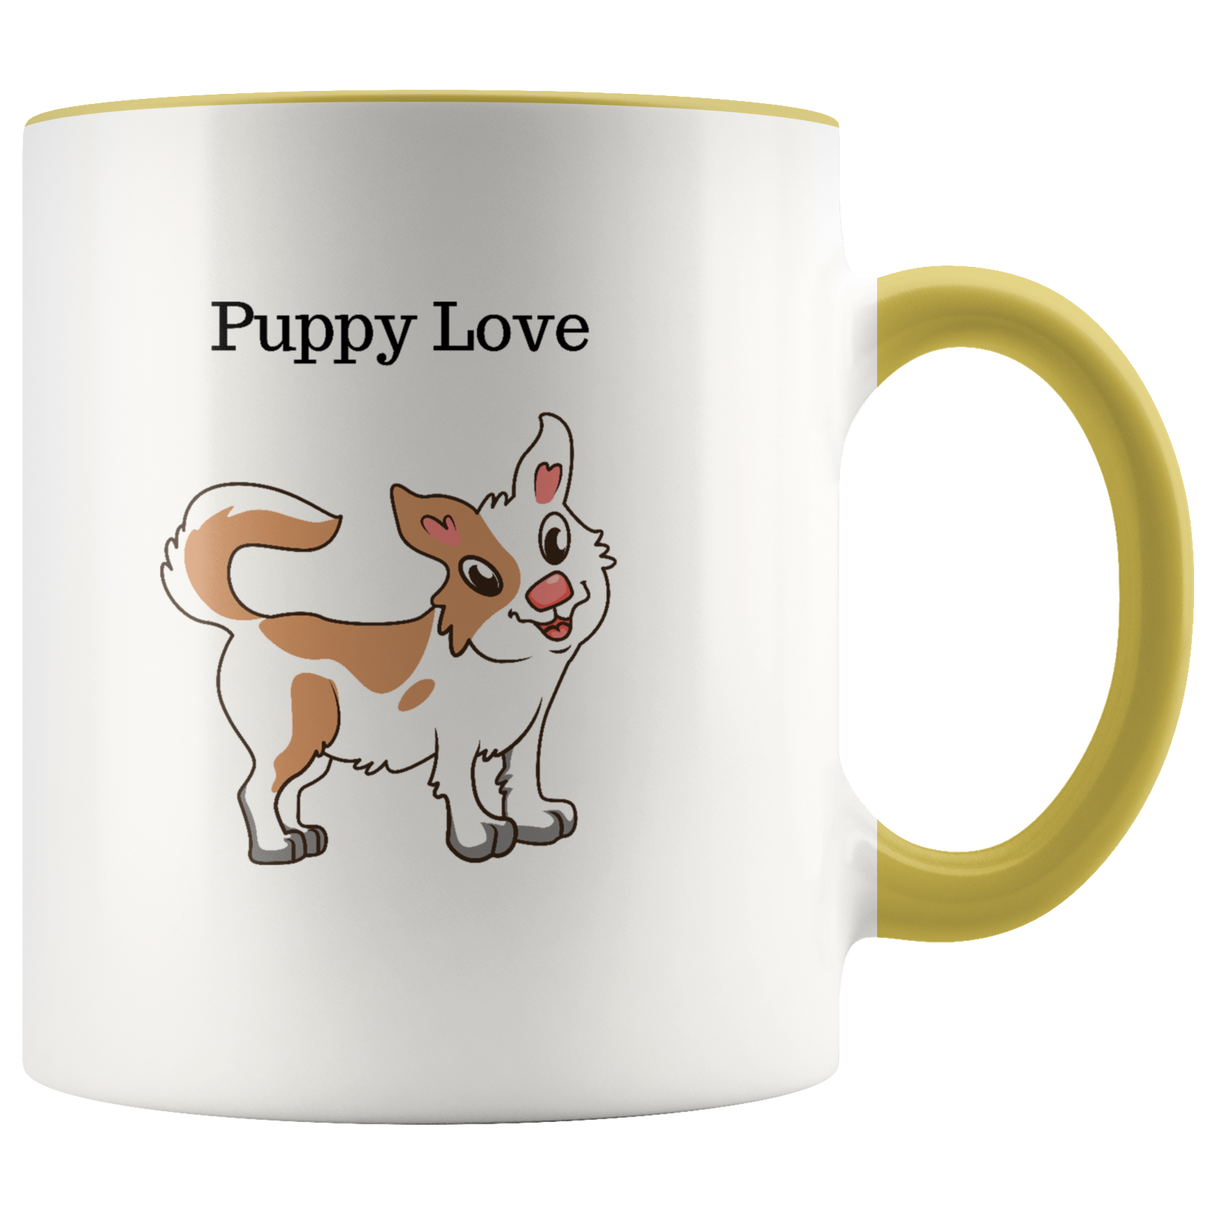 Mug Puppy Ceramic Accent Mug - Yellow | Shop Sassy Chick